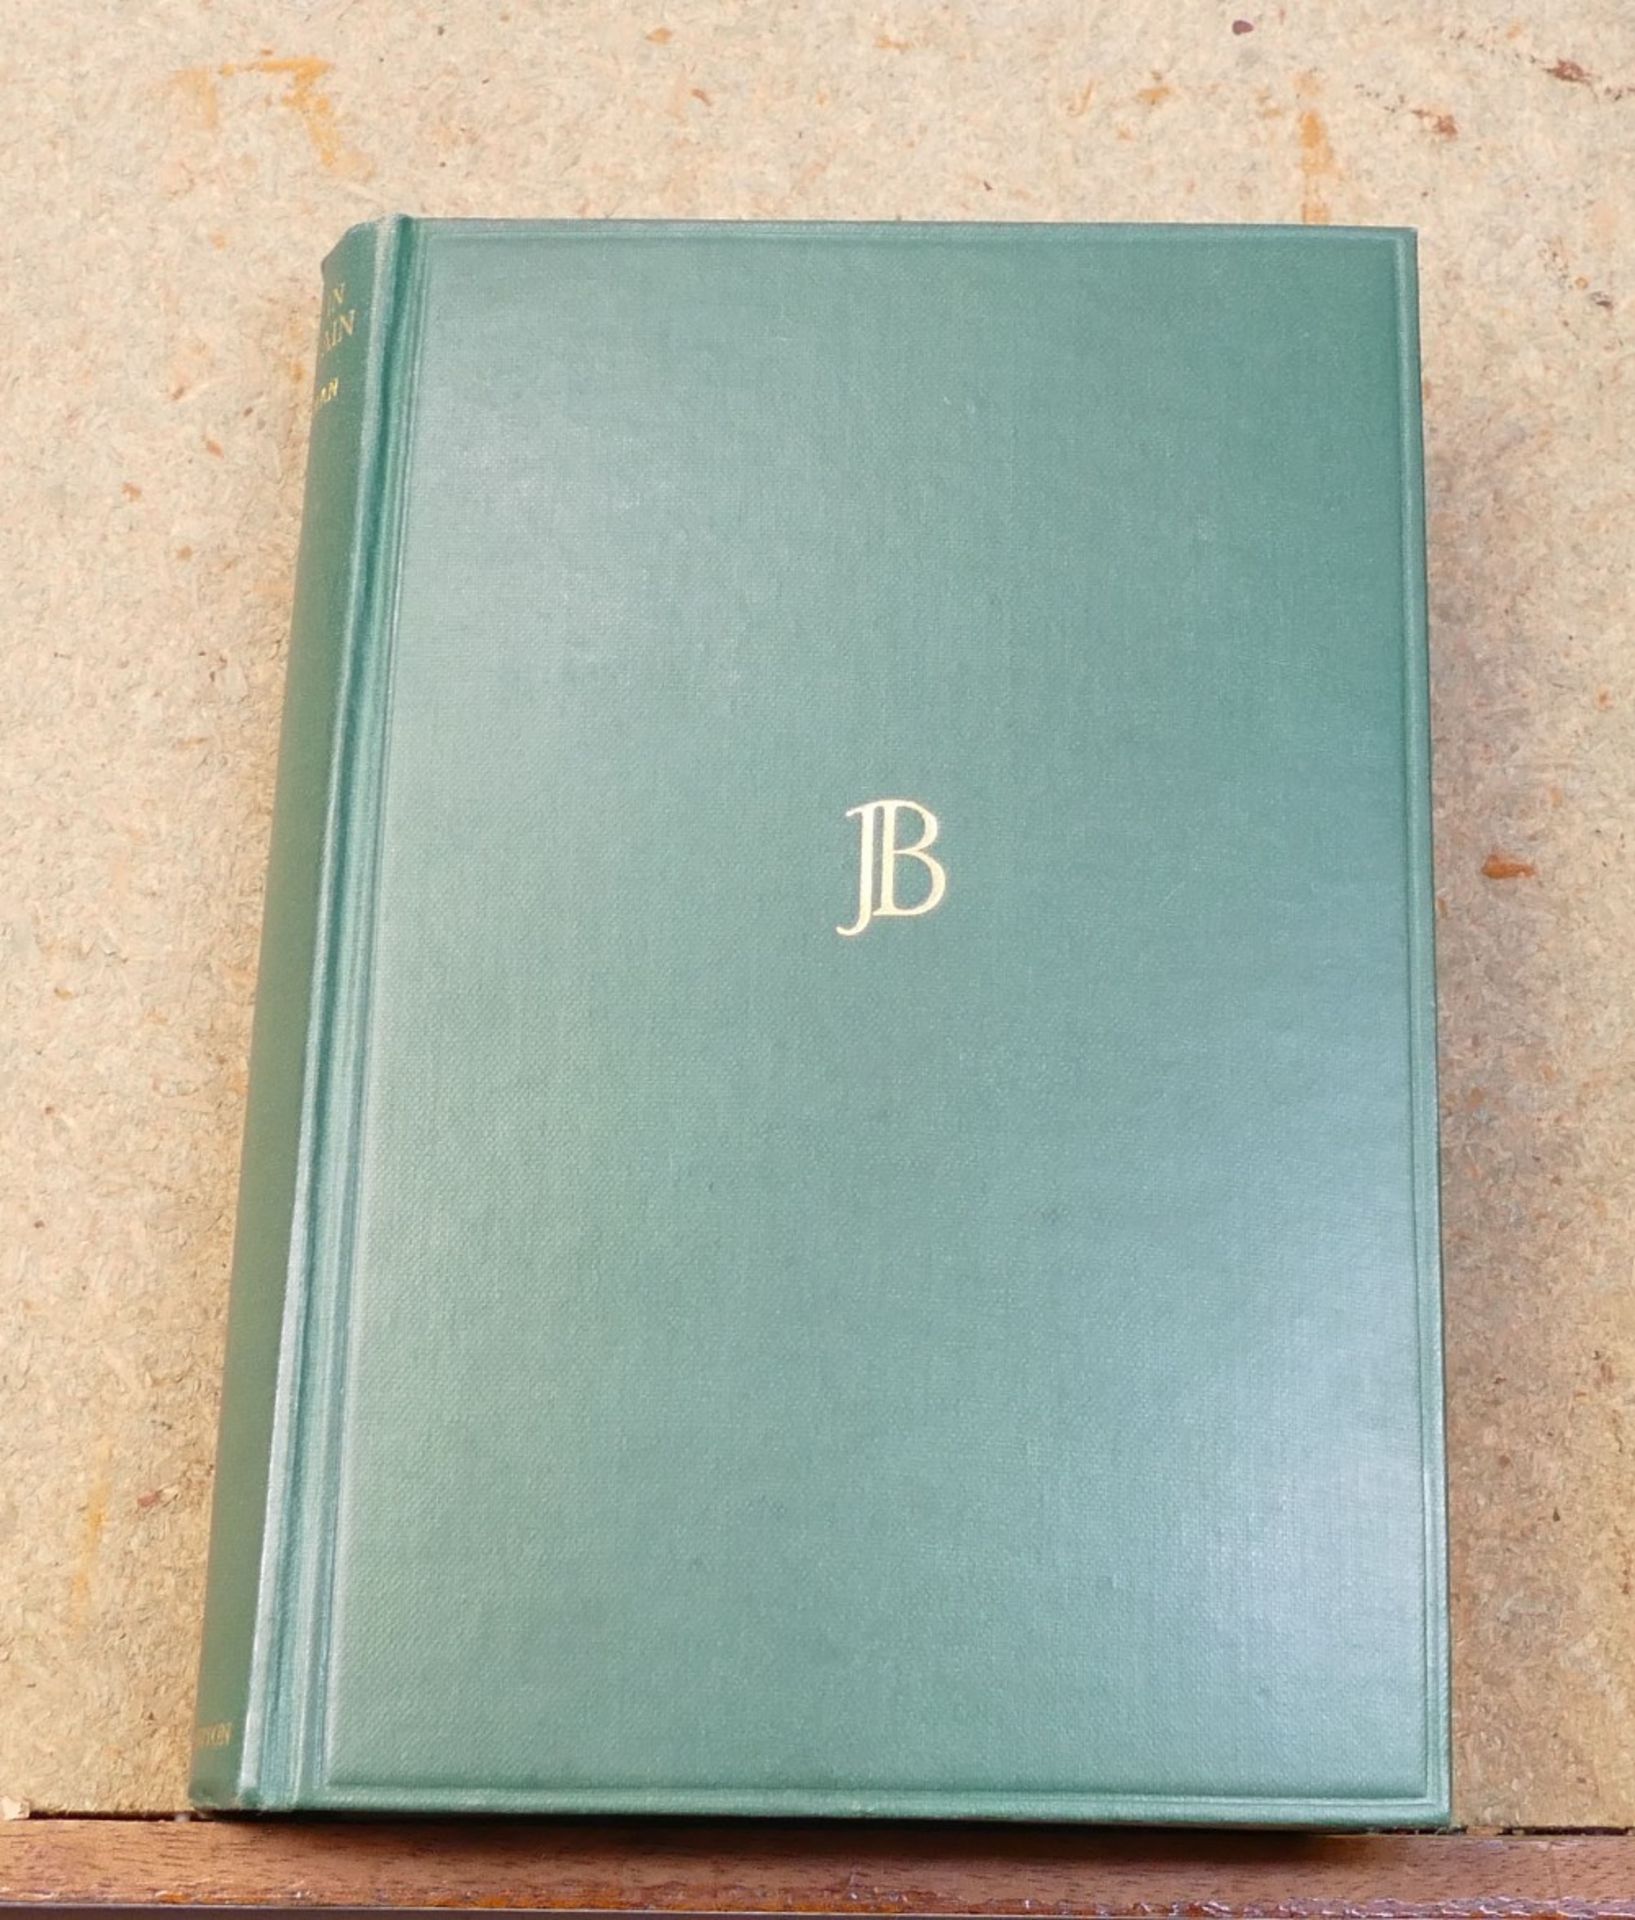 Six x 1st edition books by John Buchan - Sir Walter Scott 1932, Prester John 1910 (slight a/f), - Image 18 of 18